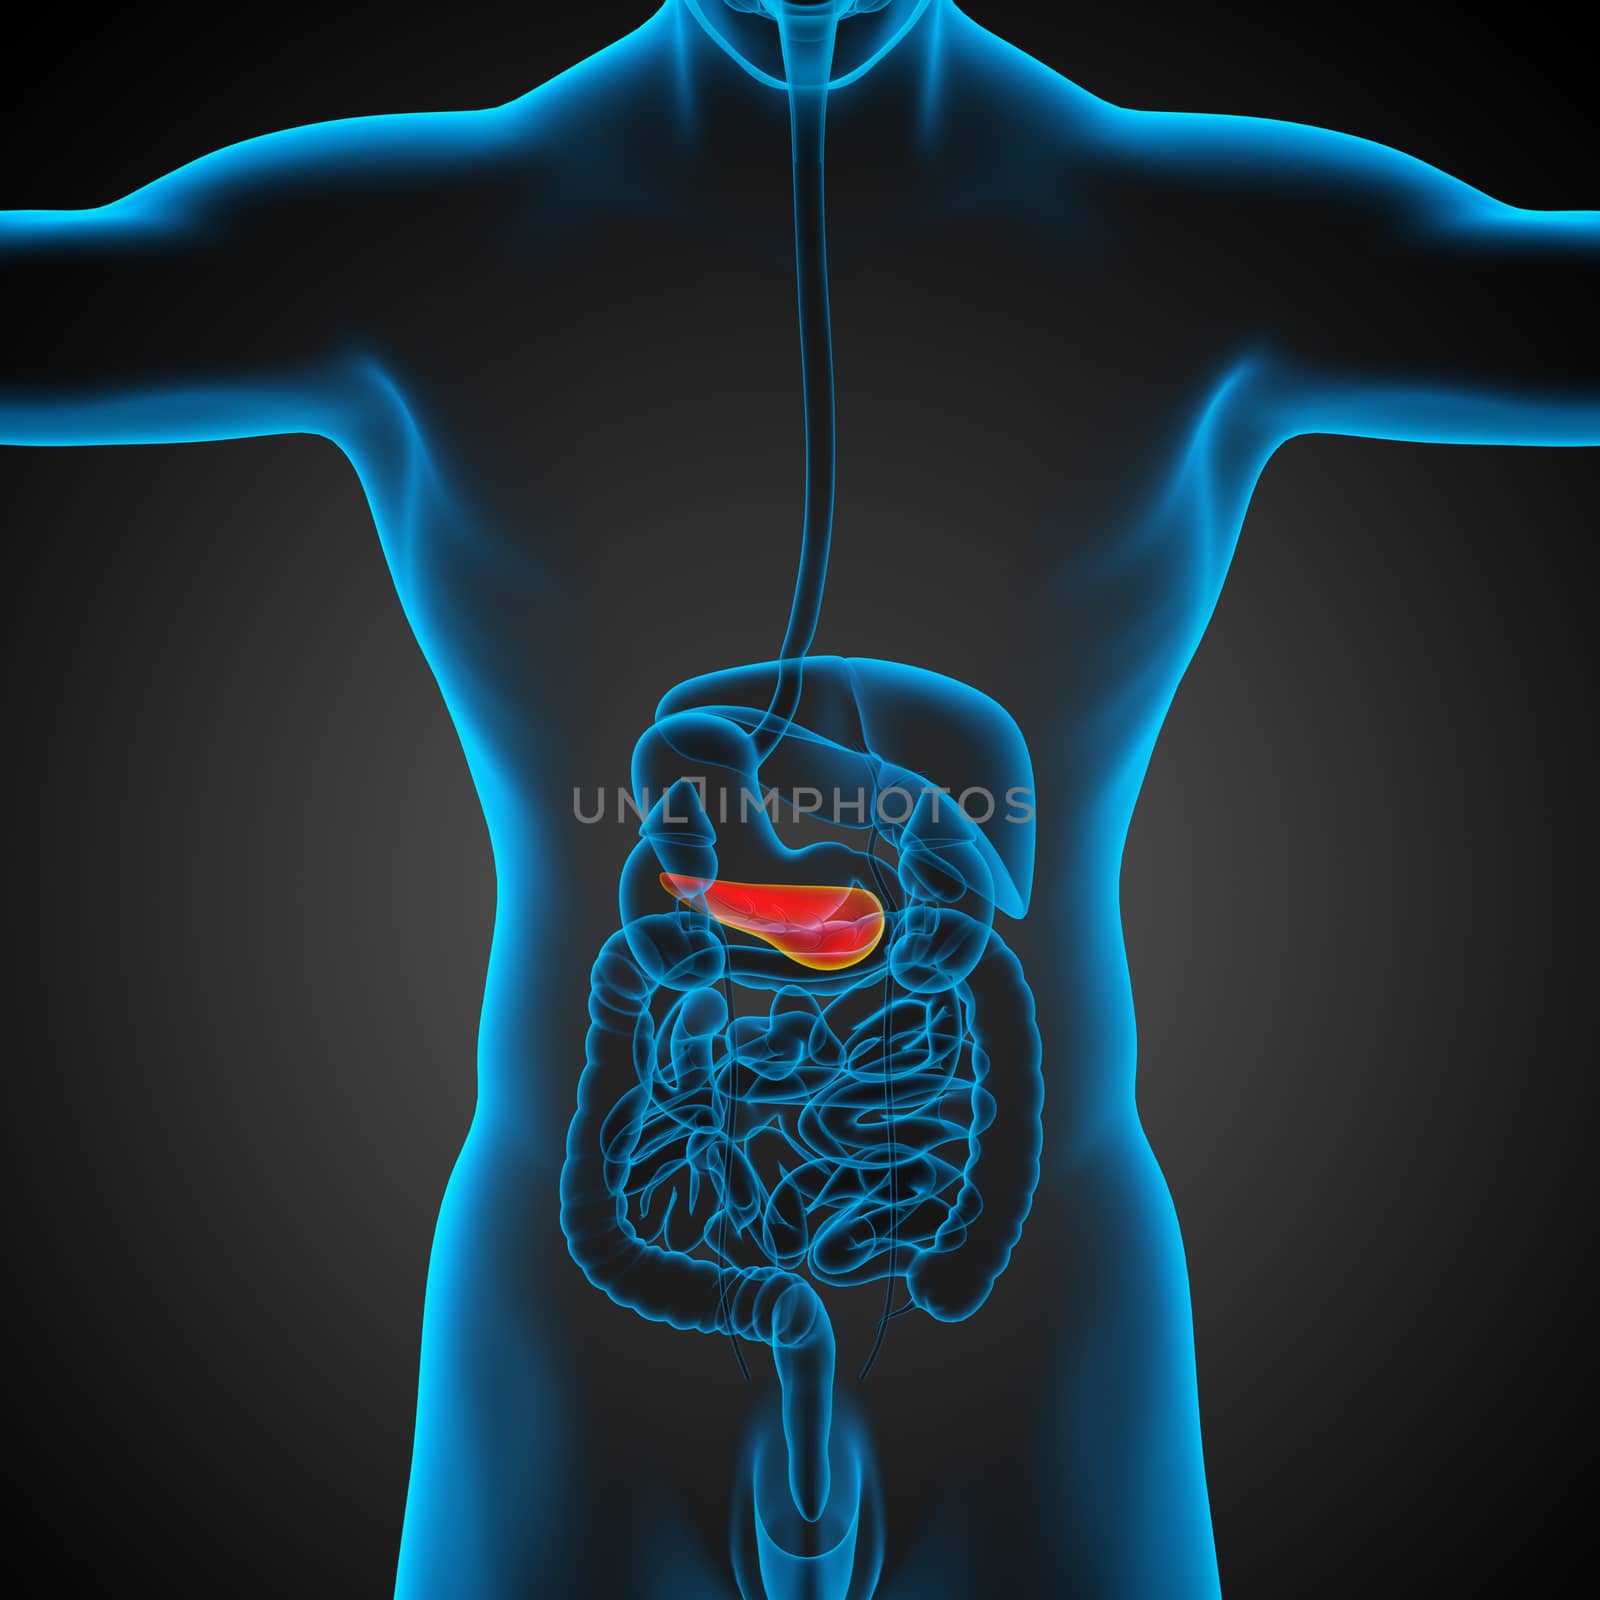 3d render medical illustration of the pancrease - back view